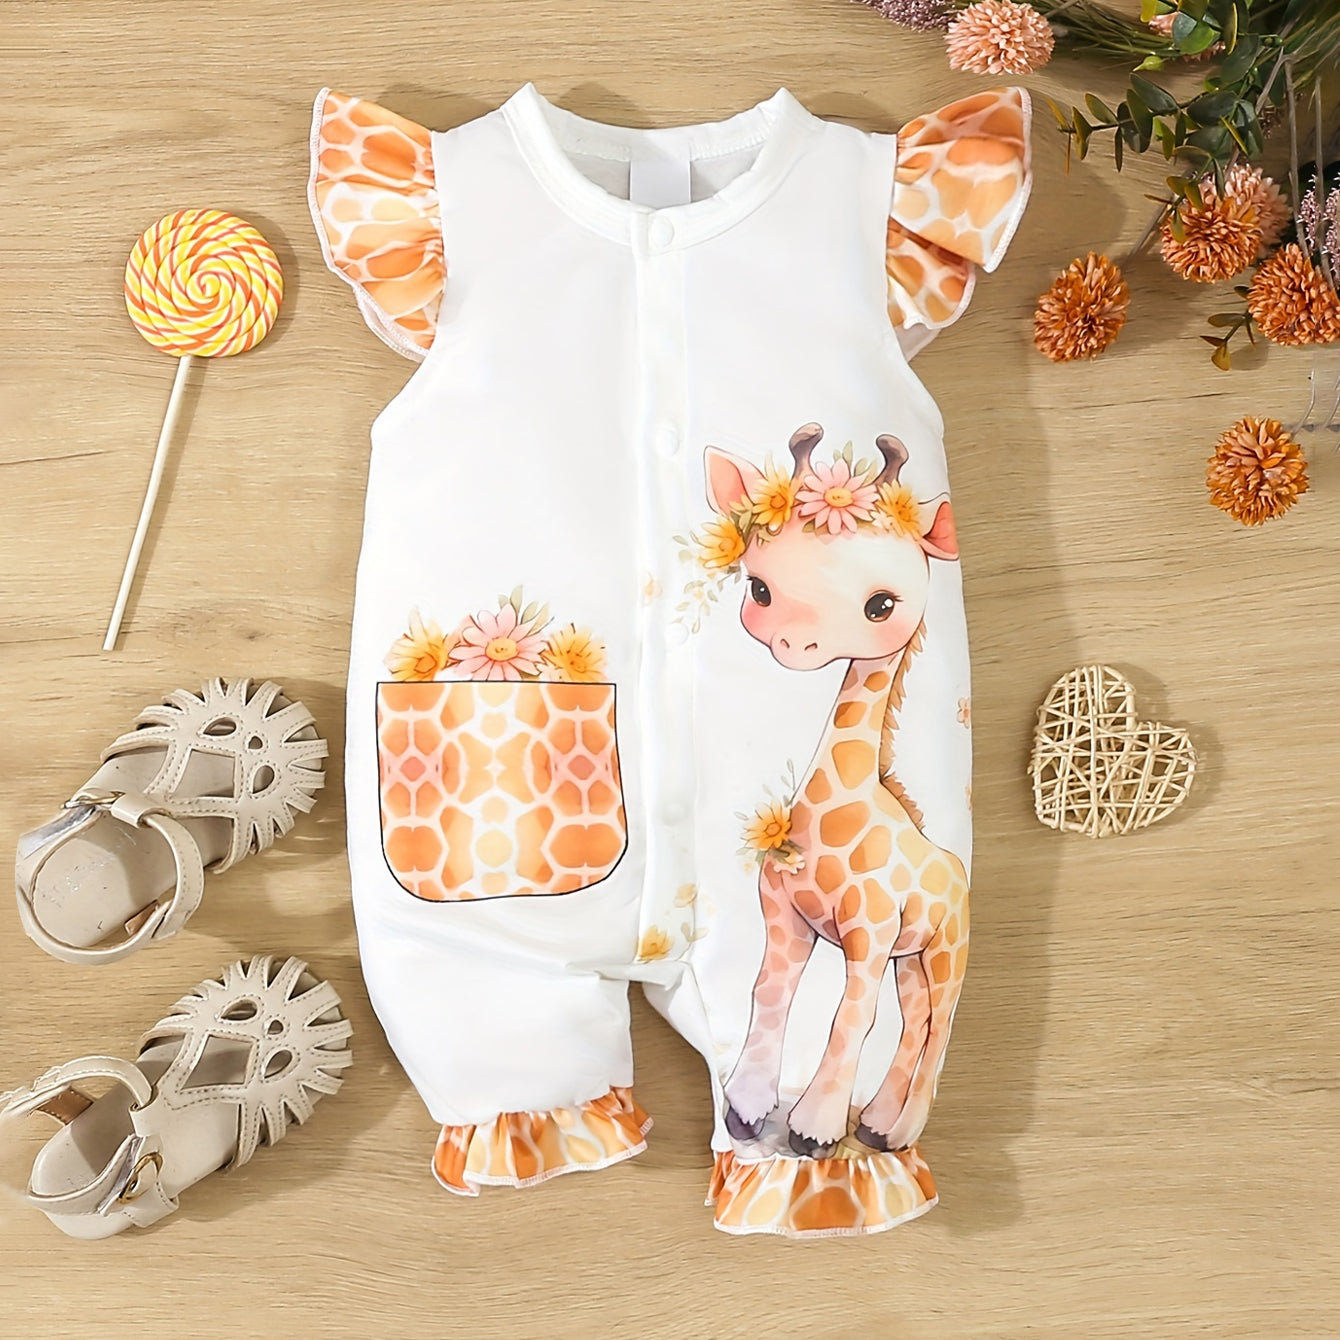 Cartoon Giraffe Printed Sleeveless Baby Jumpsuit